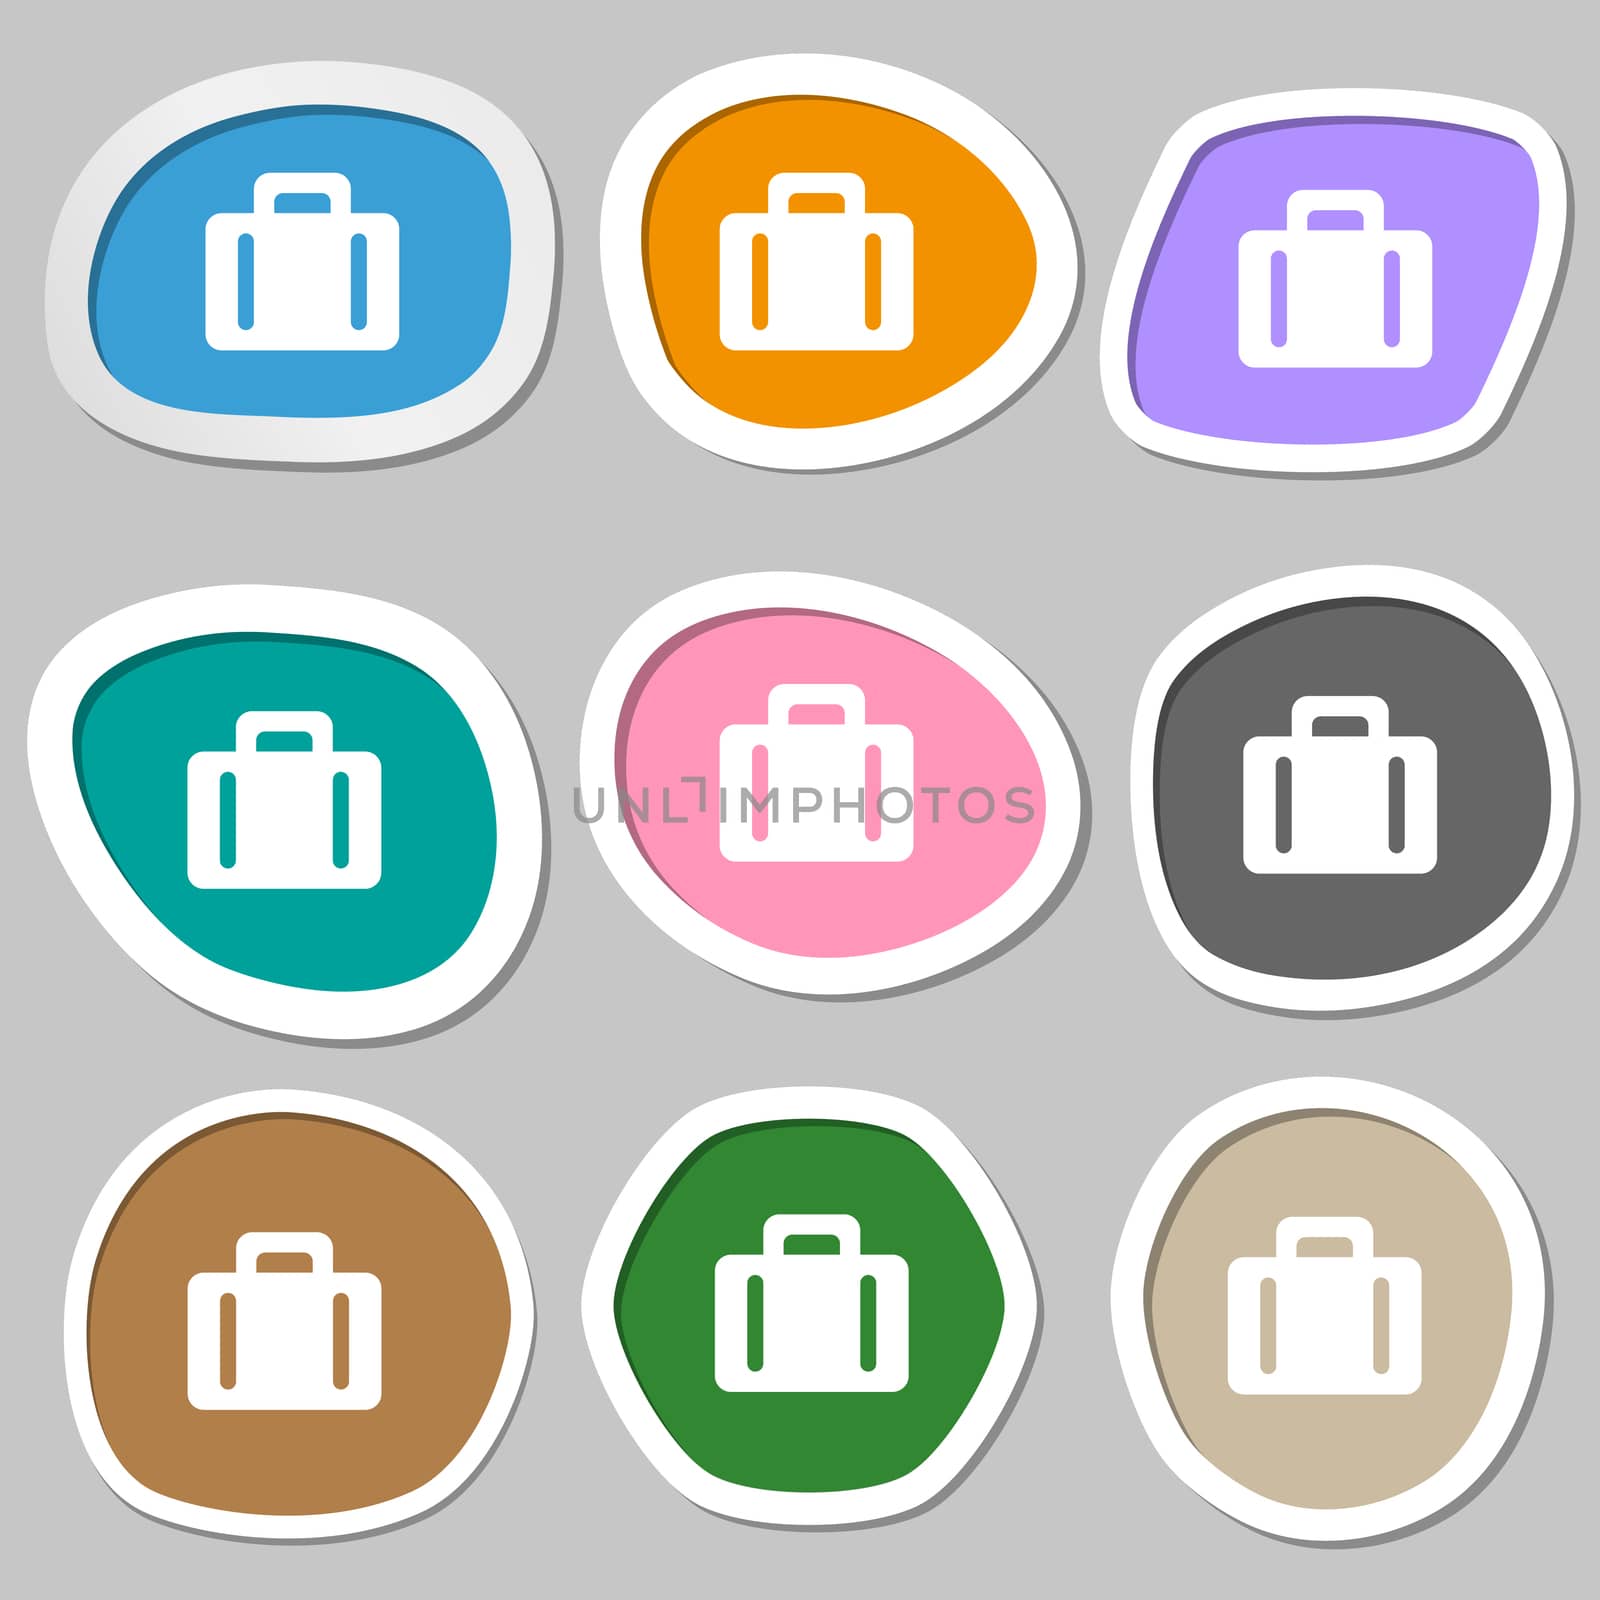 suitcase icon symbols. Multicolored paper stickers. illustration